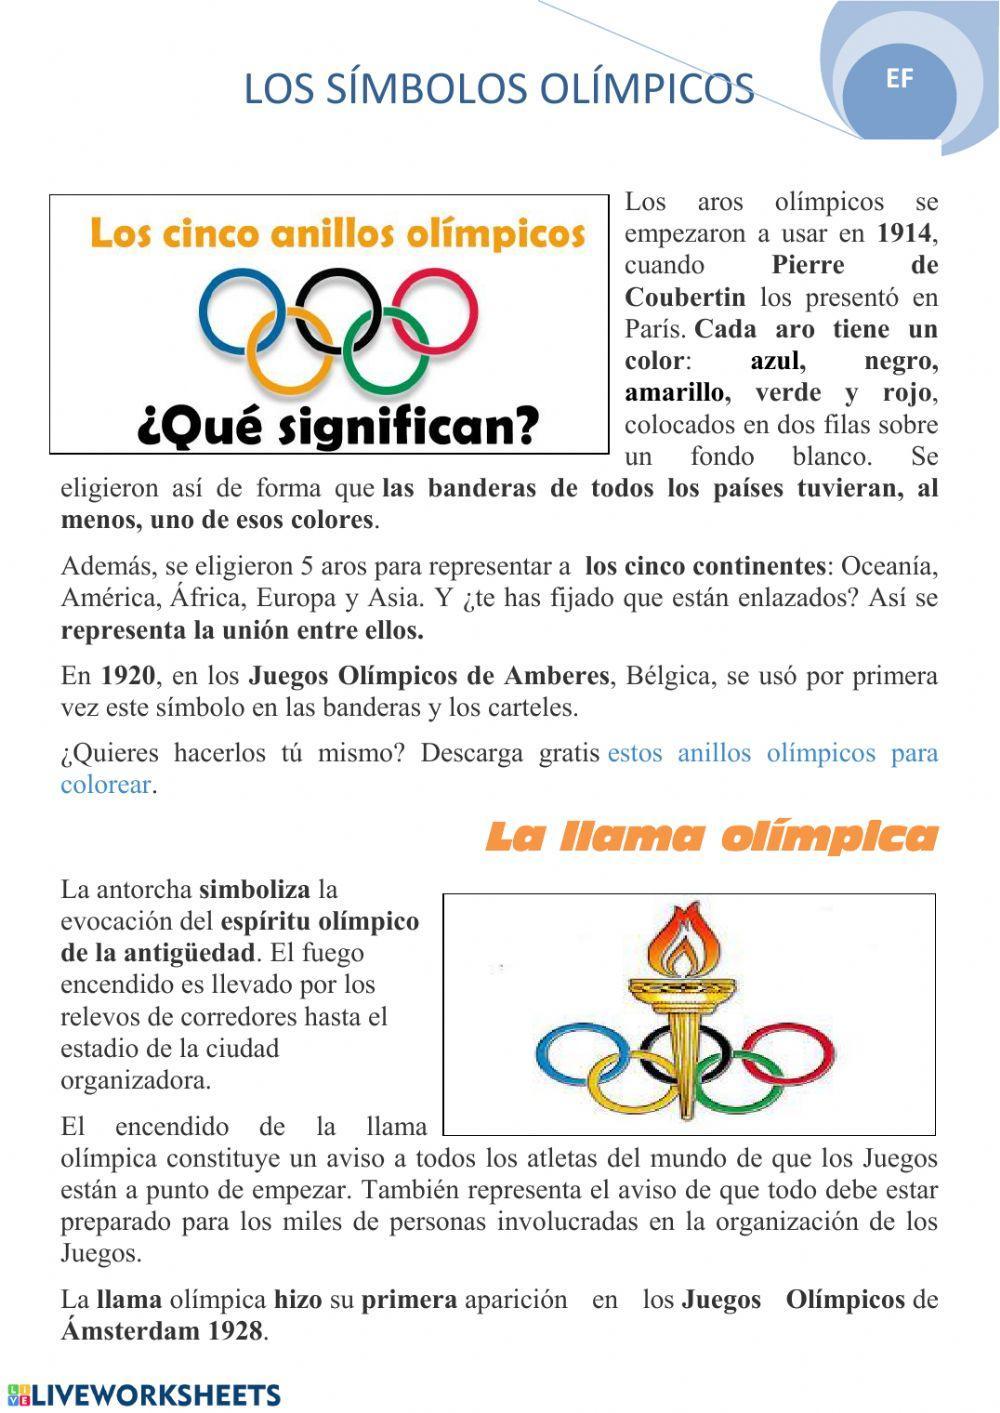 Símbolos olímpicos